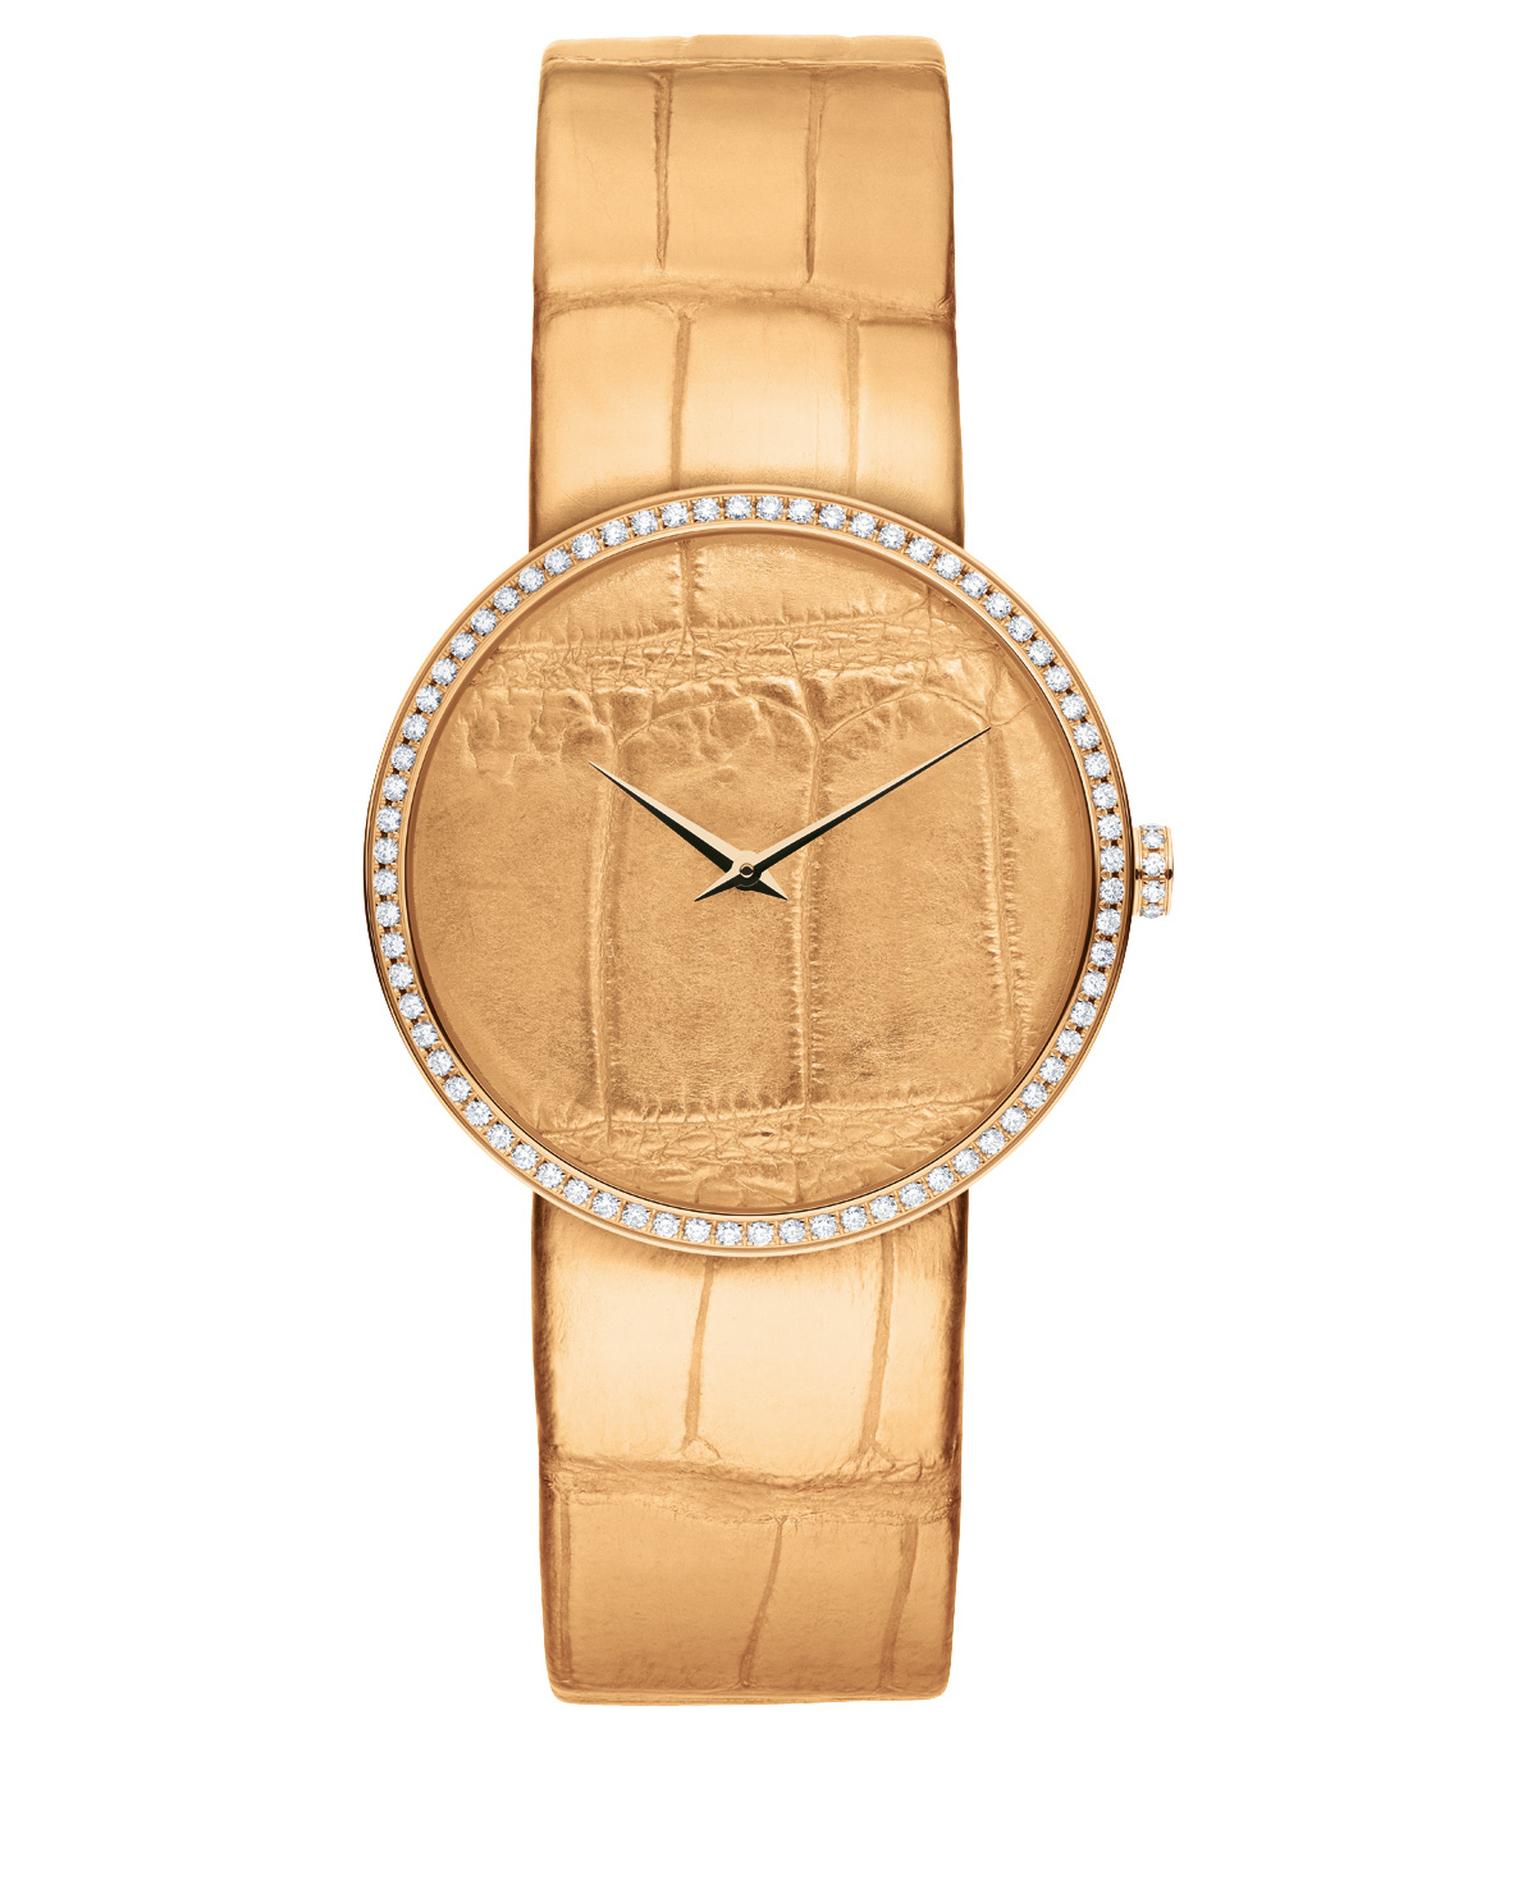 La-D-de-Dior-Alligator-watch-in-pink-gold-and-diamonds_20140512_Zoom